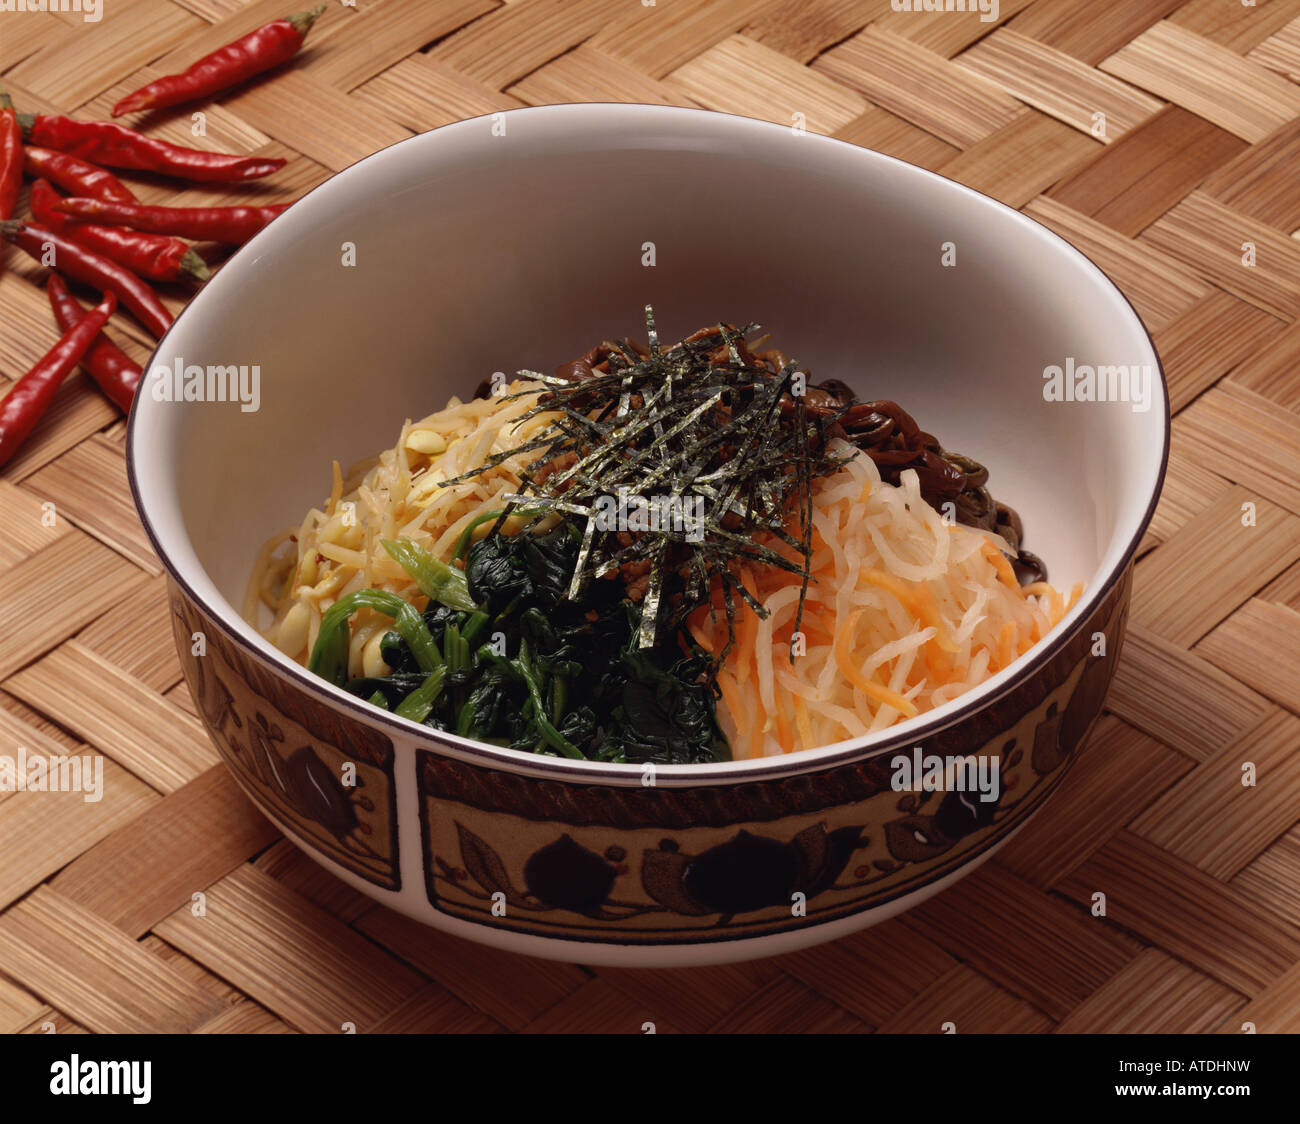 Bowl of Korean food Stock Photo